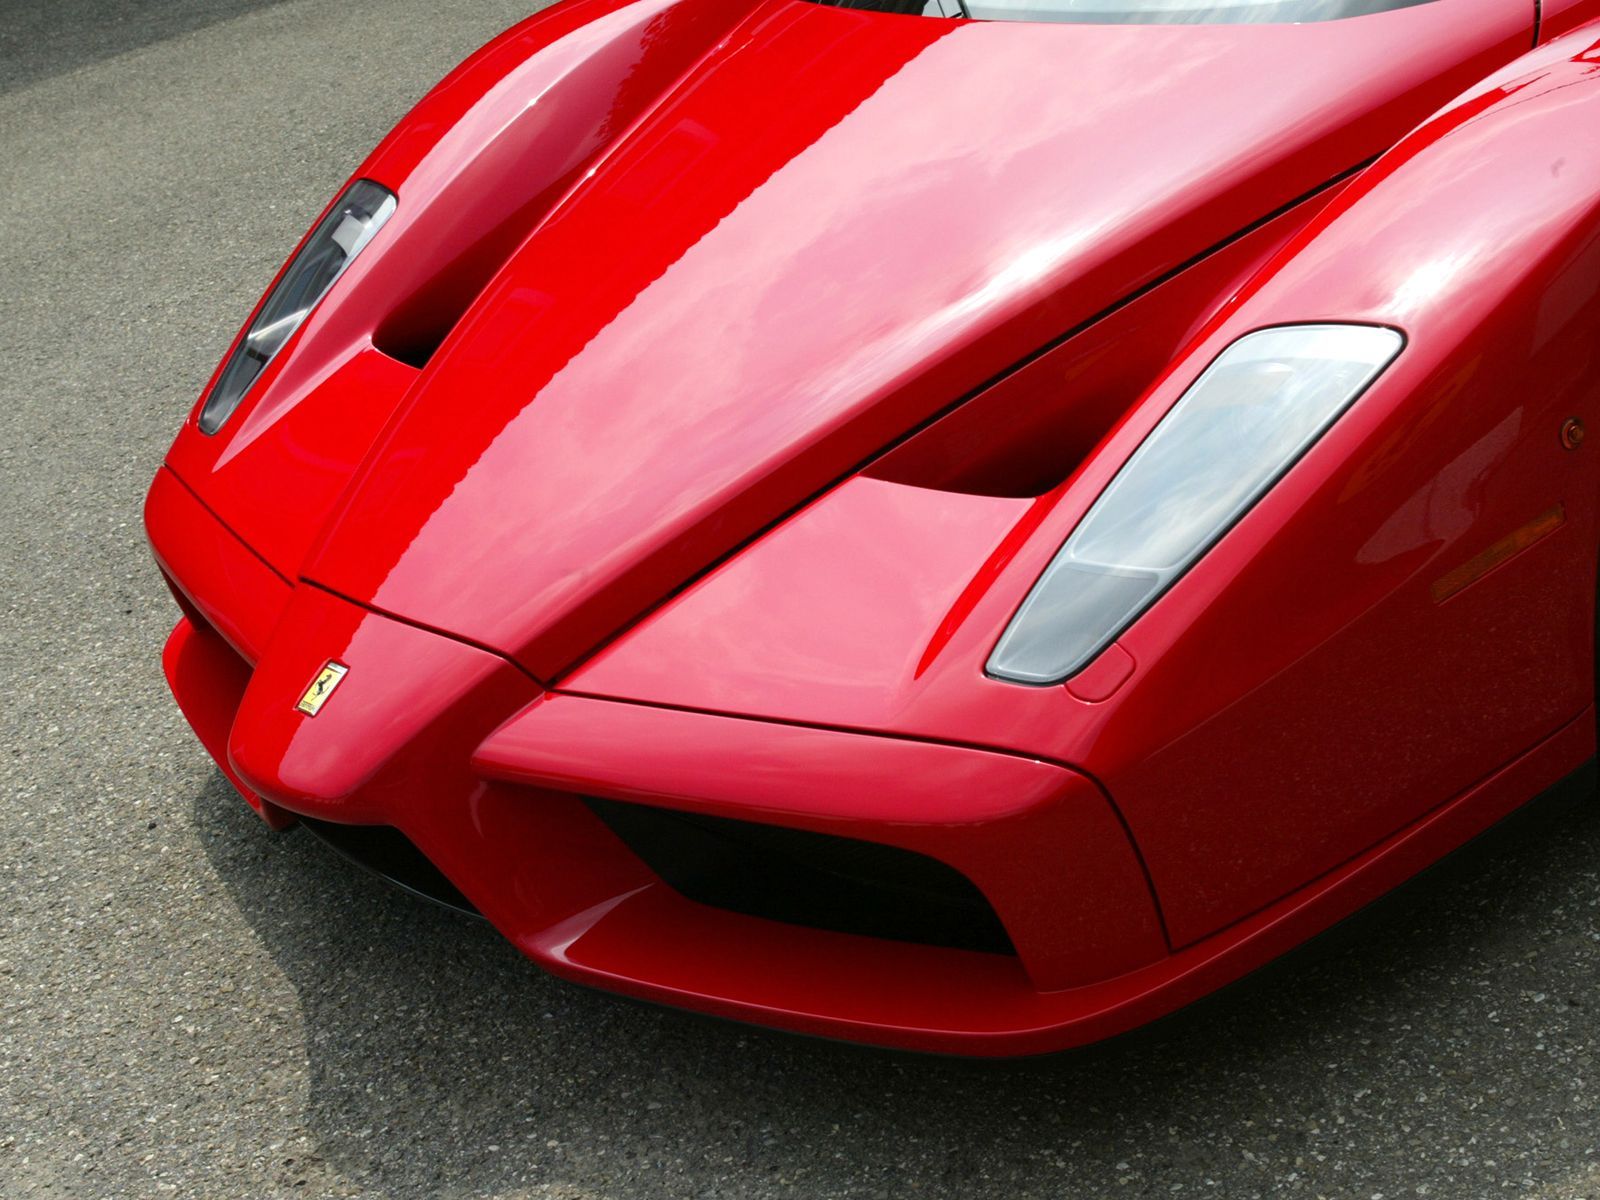 2011_Ferrari_Enzo_netcarshow_netcar_car_images_car_photo-393086.jpg!d.jpg